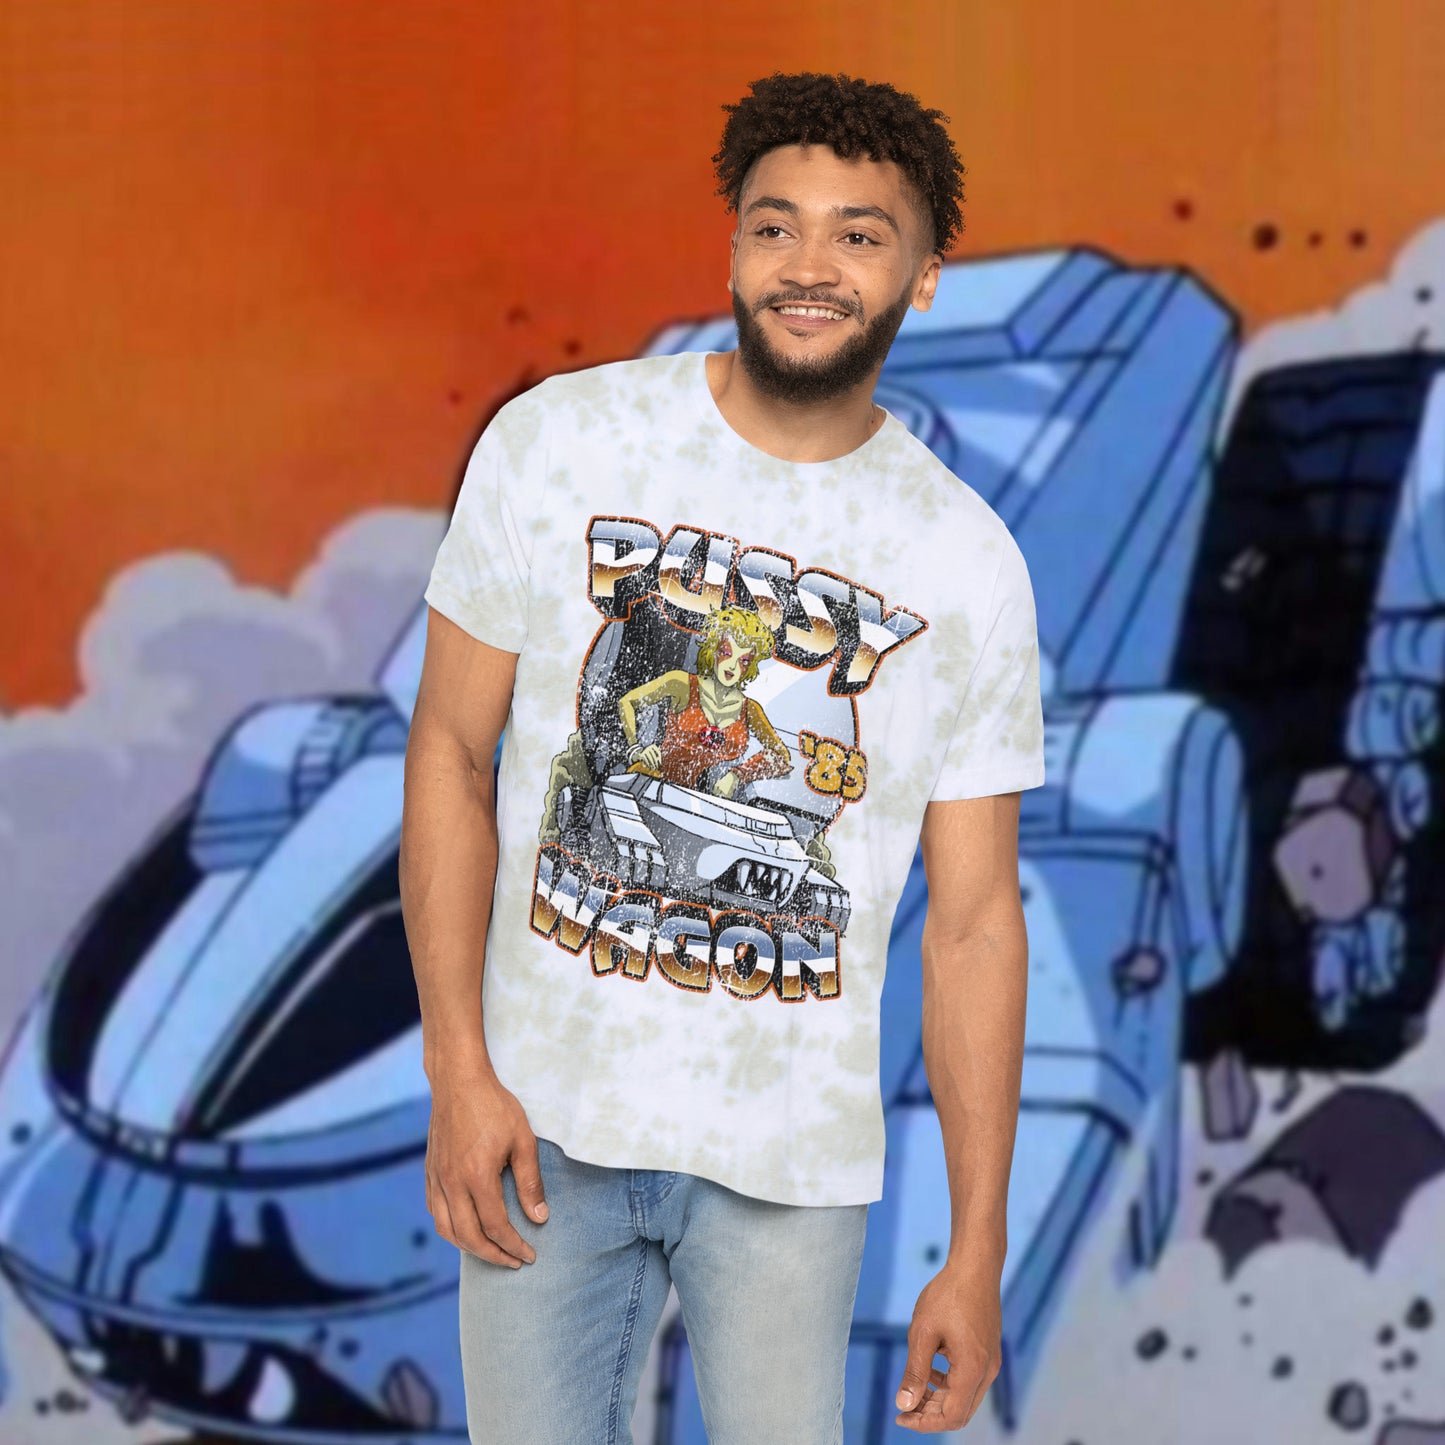 Pussy Wagon 2.0 tie-dye t-shirt